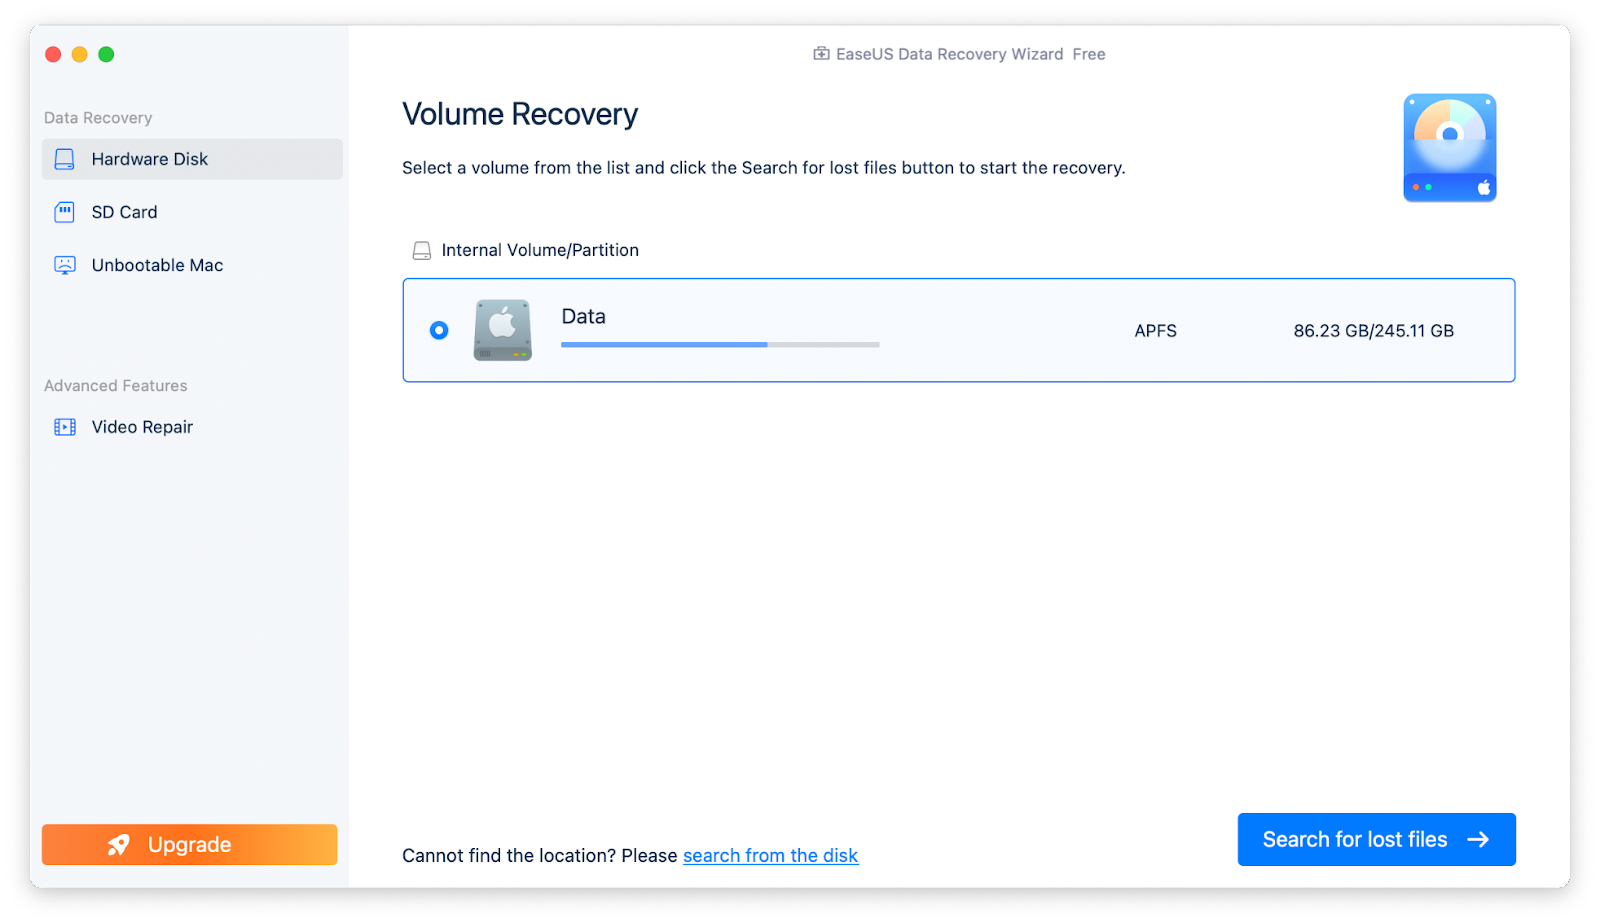 easeus data recovery wizard mac